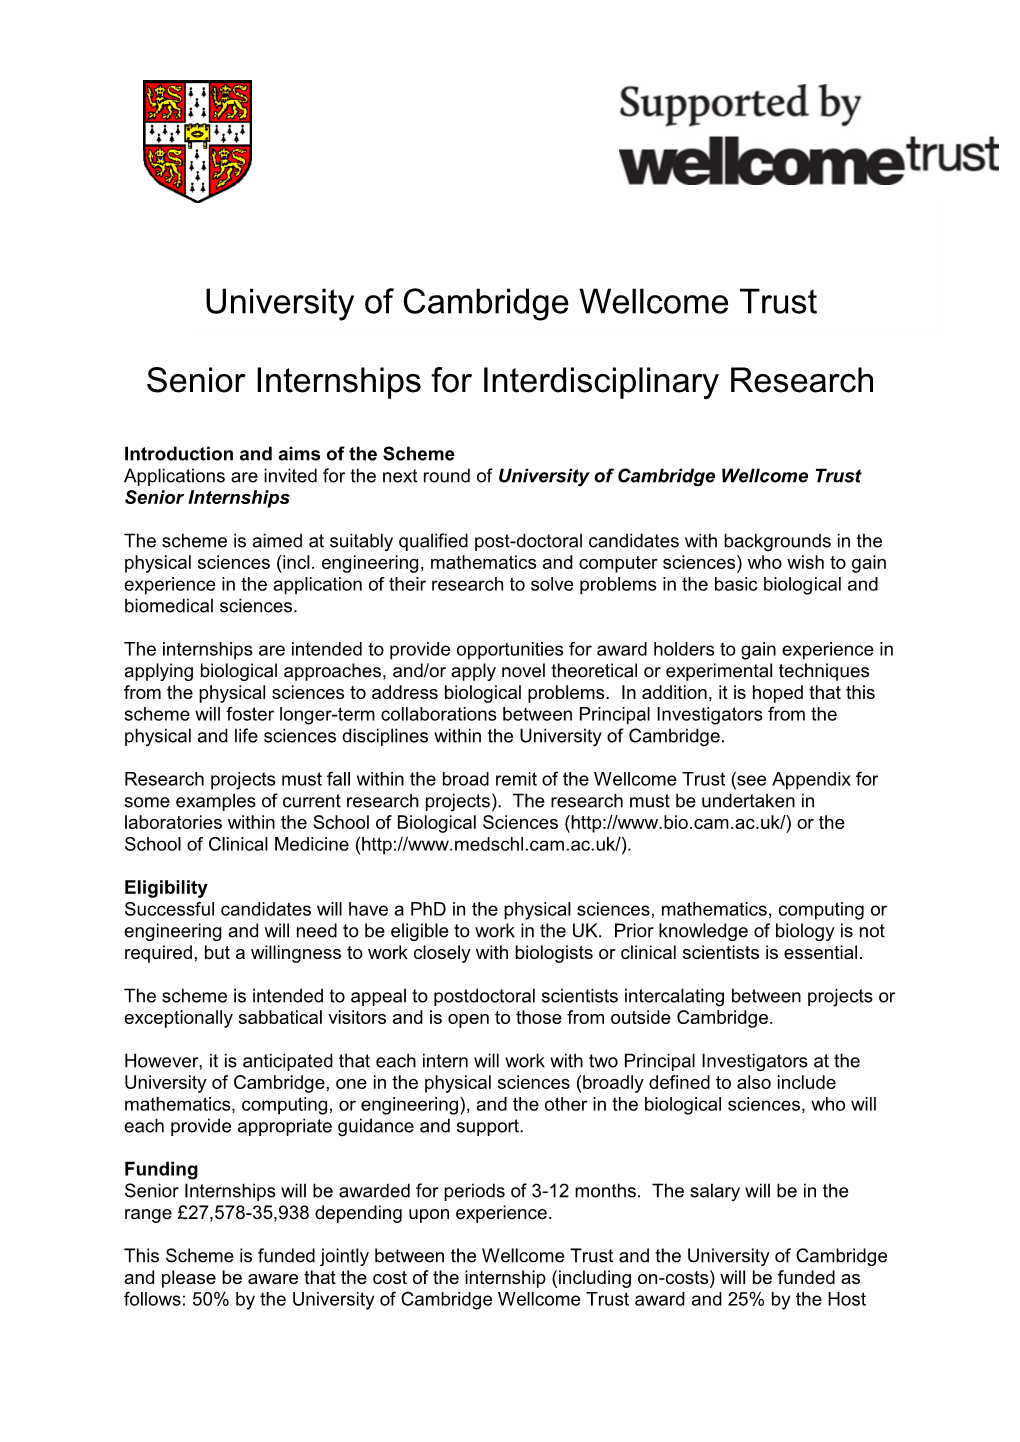 University of Cambridge Wellcome Trust Senior Internships For